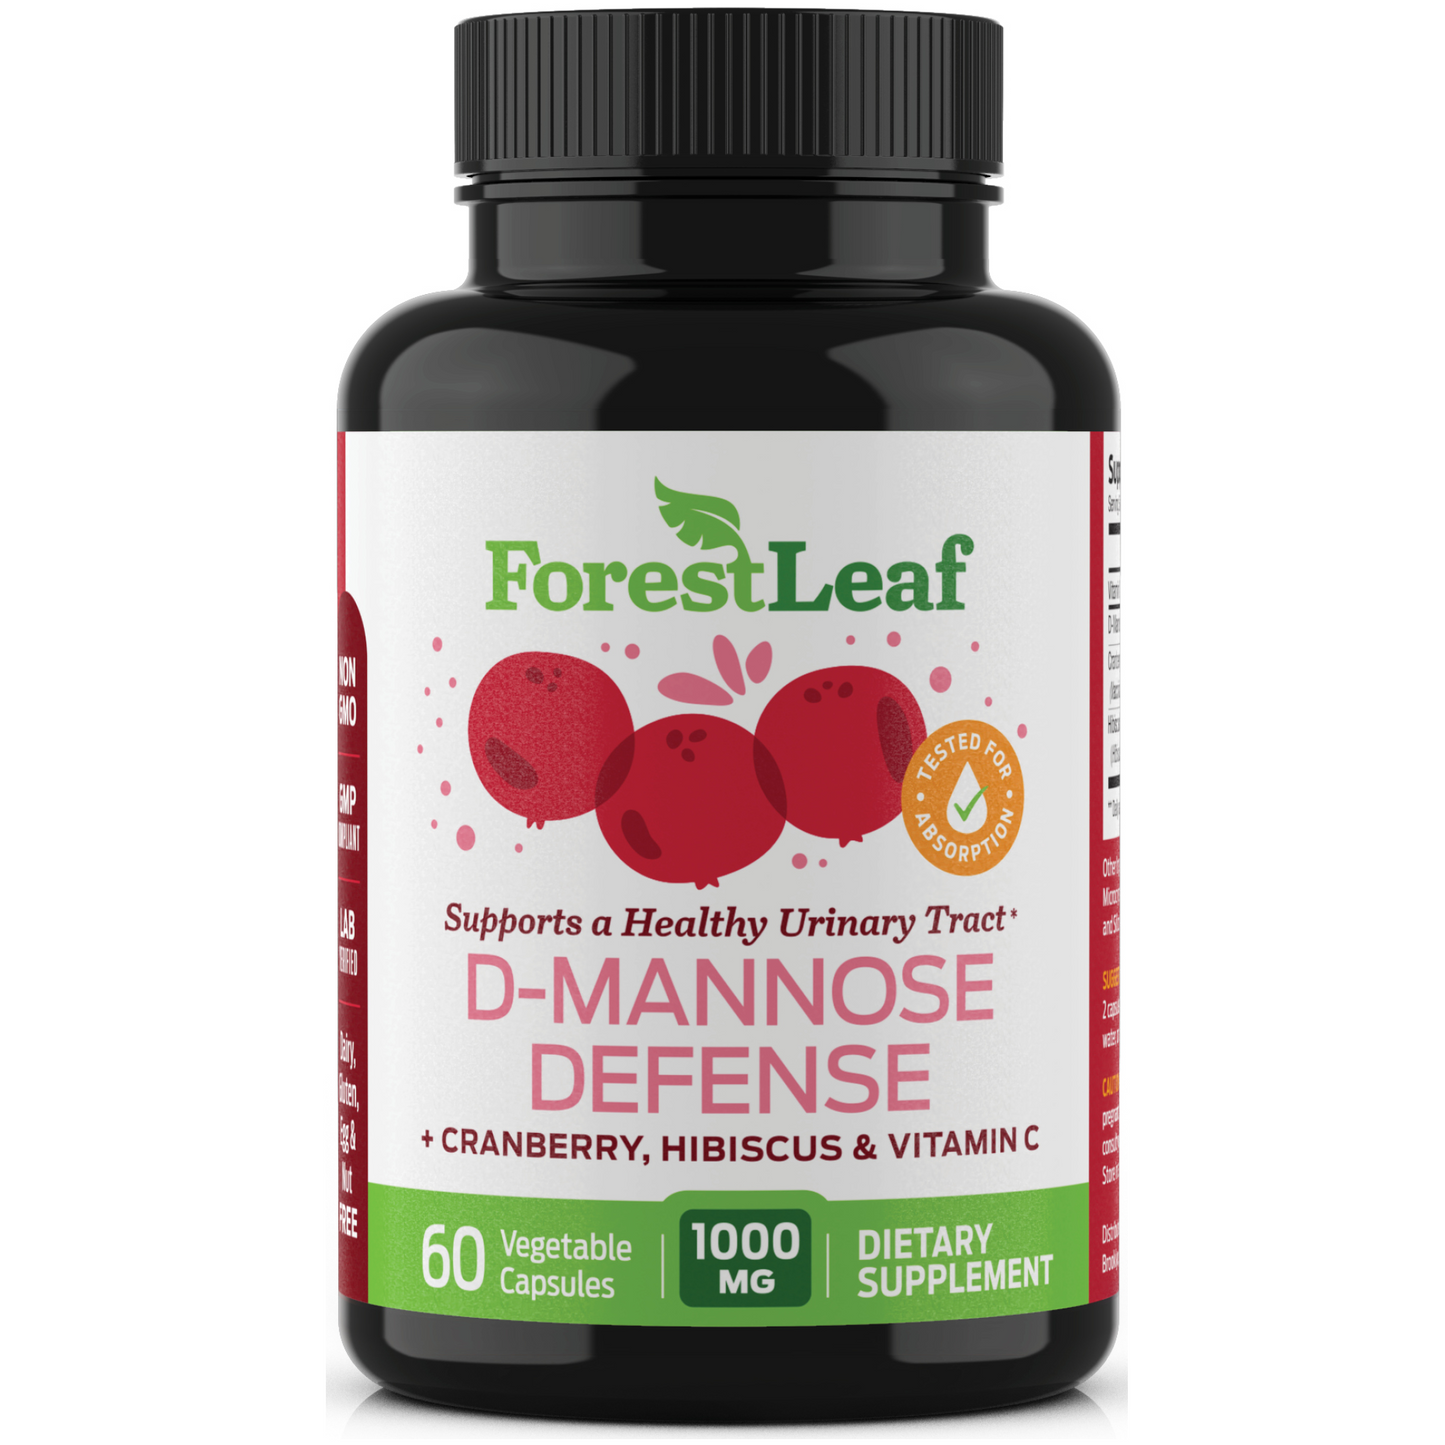 D-mannose Defense